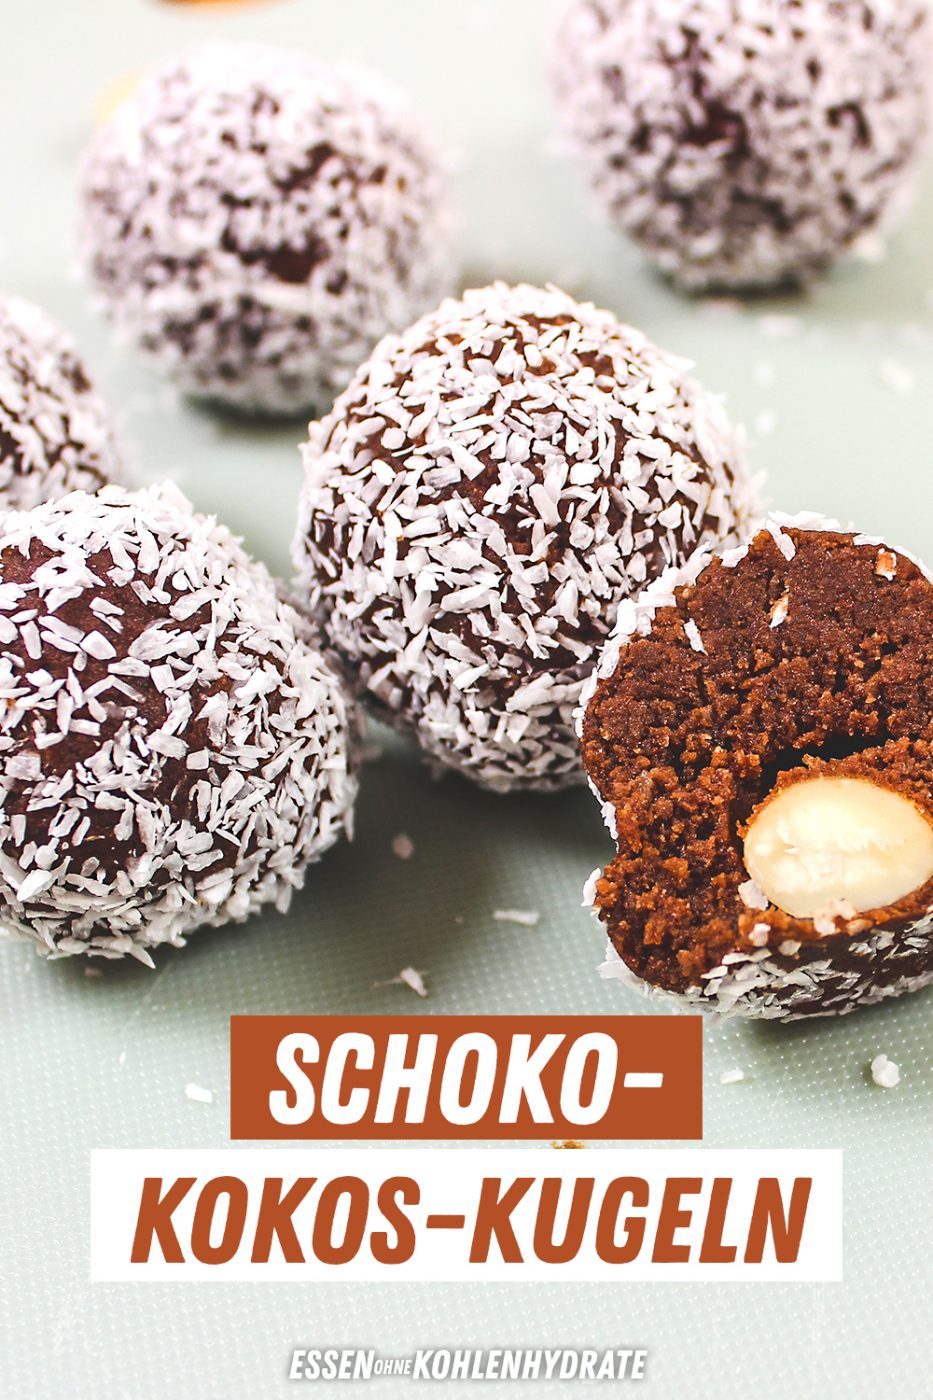 Schoko-Kokos-Kugeln - Essen ohne Kohlenhydrate